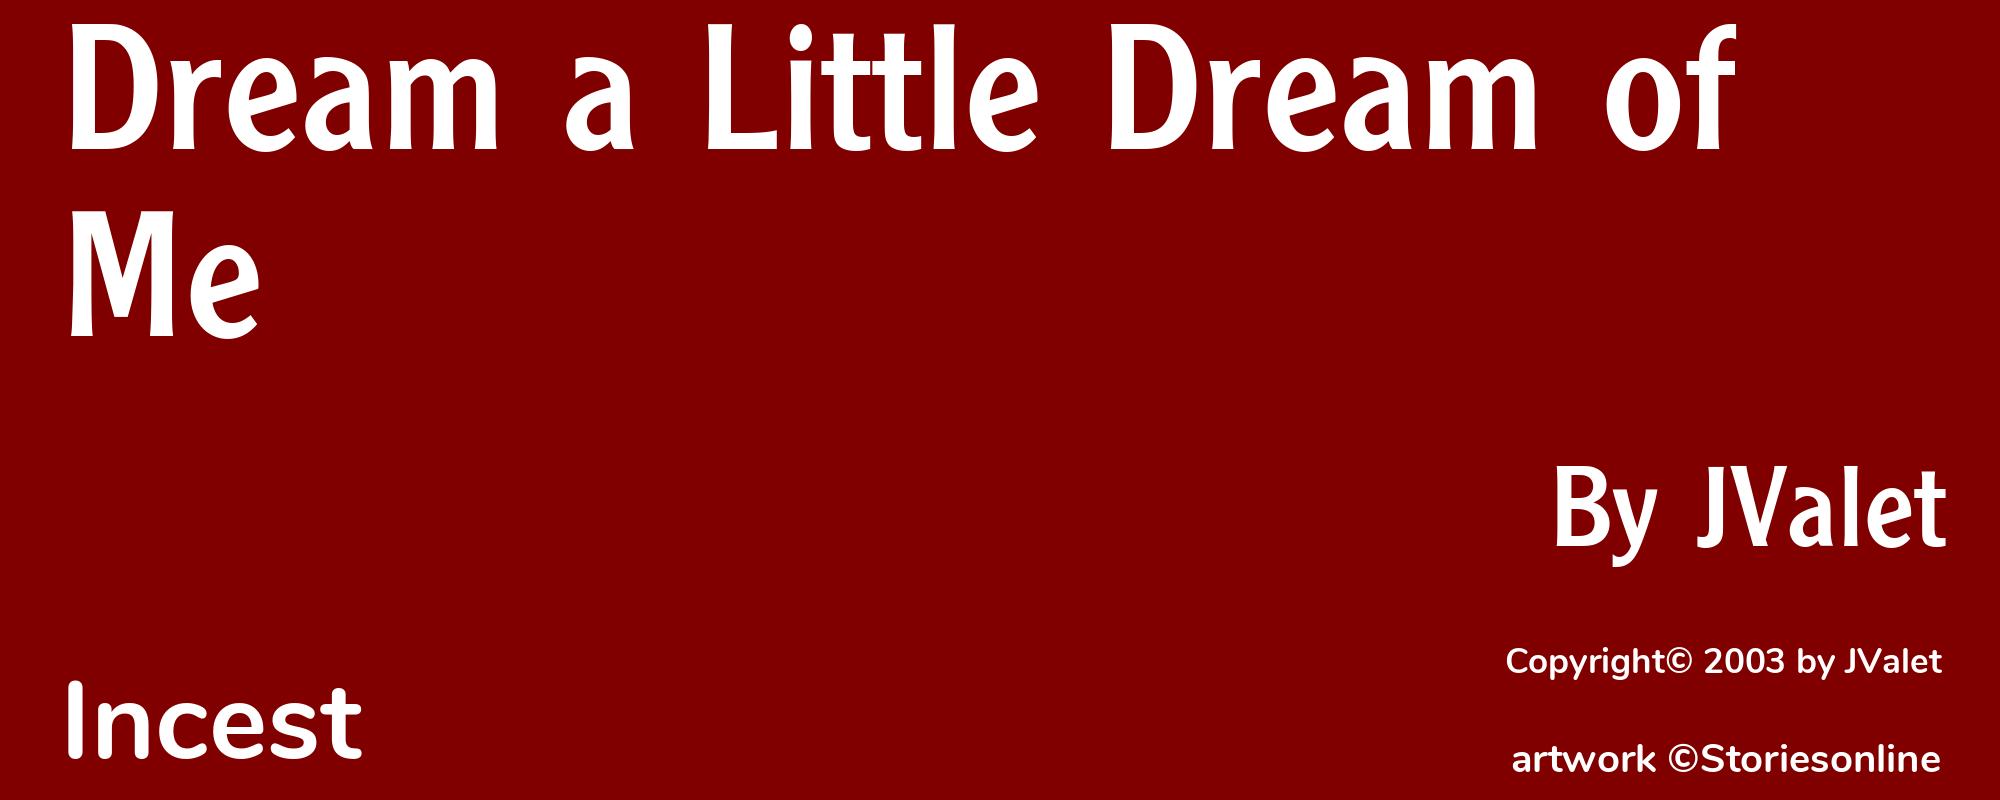 Dream a Little Dream of Me - Cover